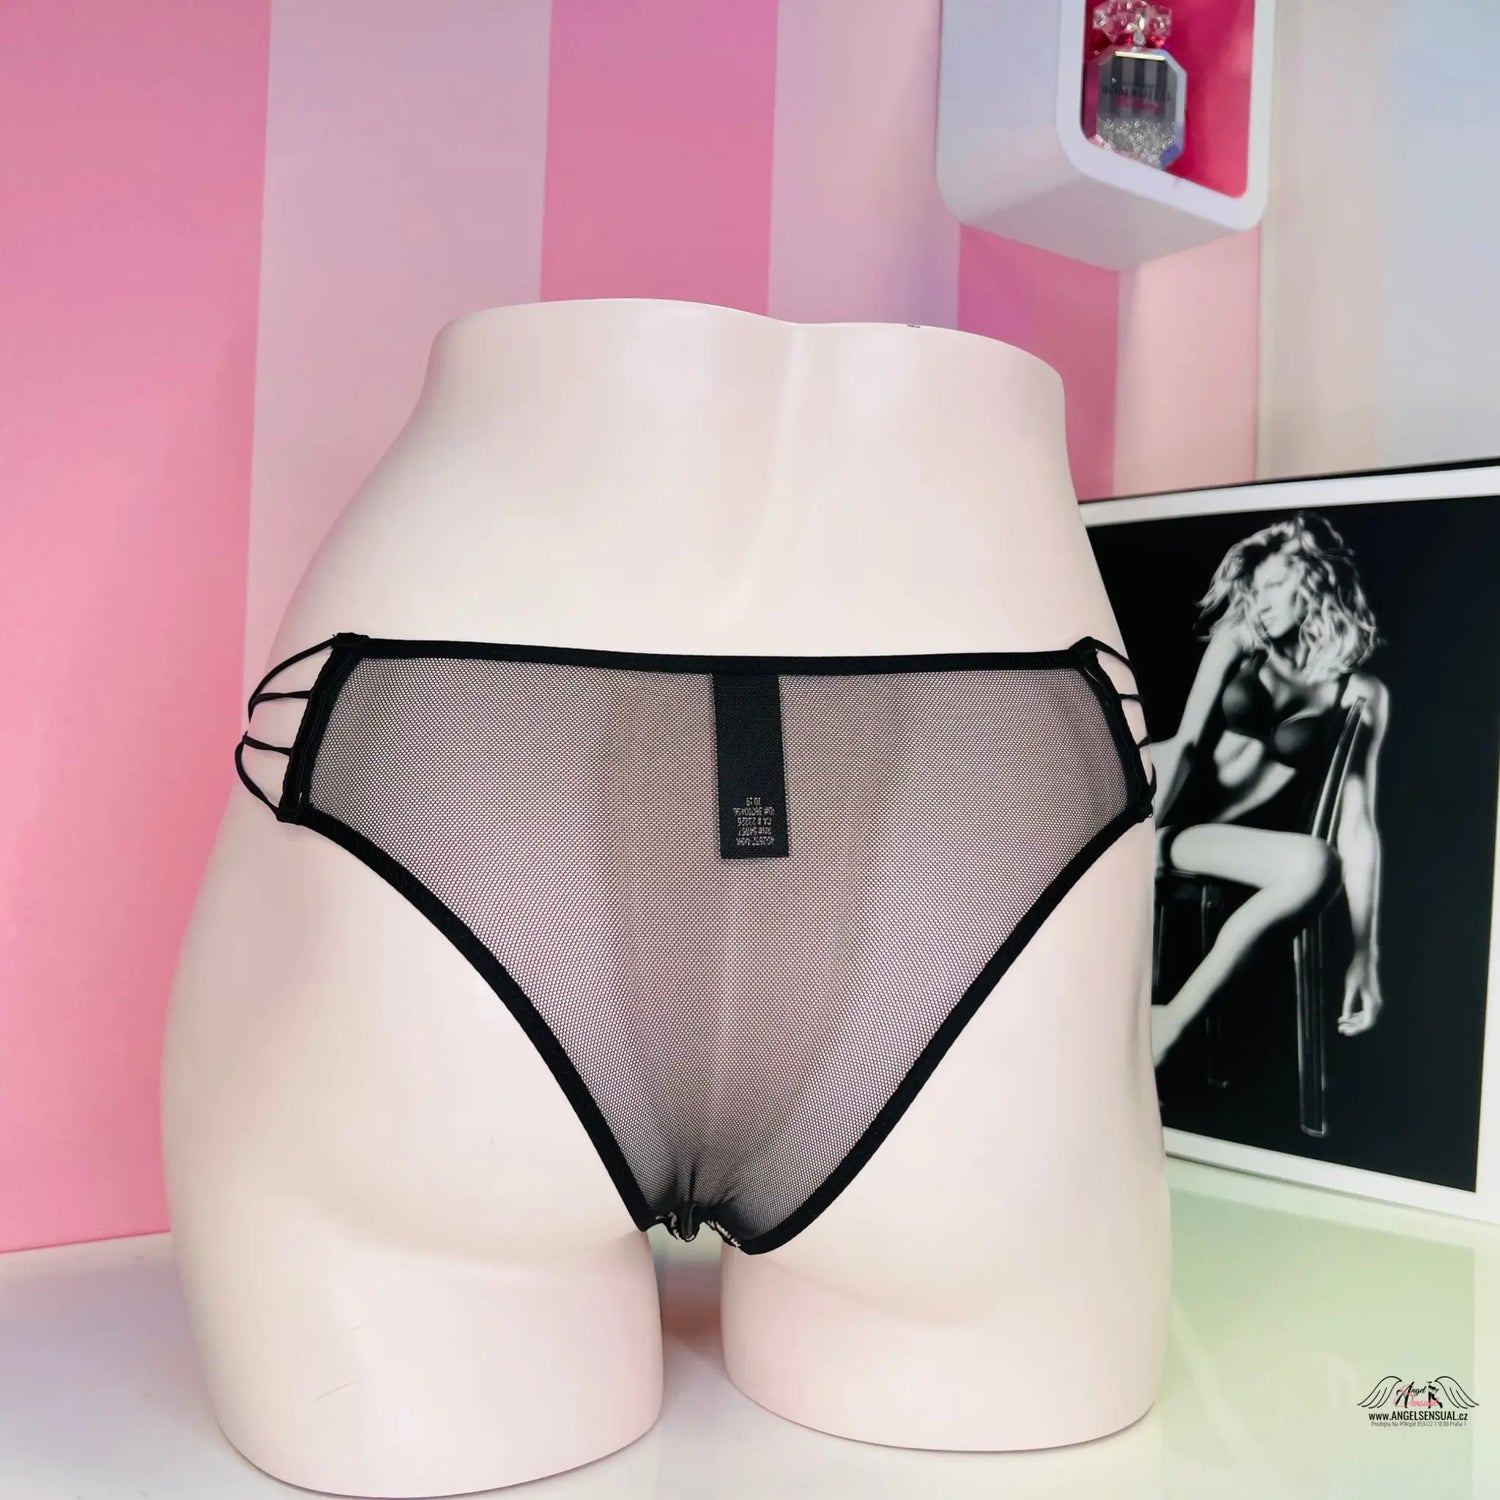 Síťované tanga s úzkými gumičkami - Kalhotky Victoria’s Secret